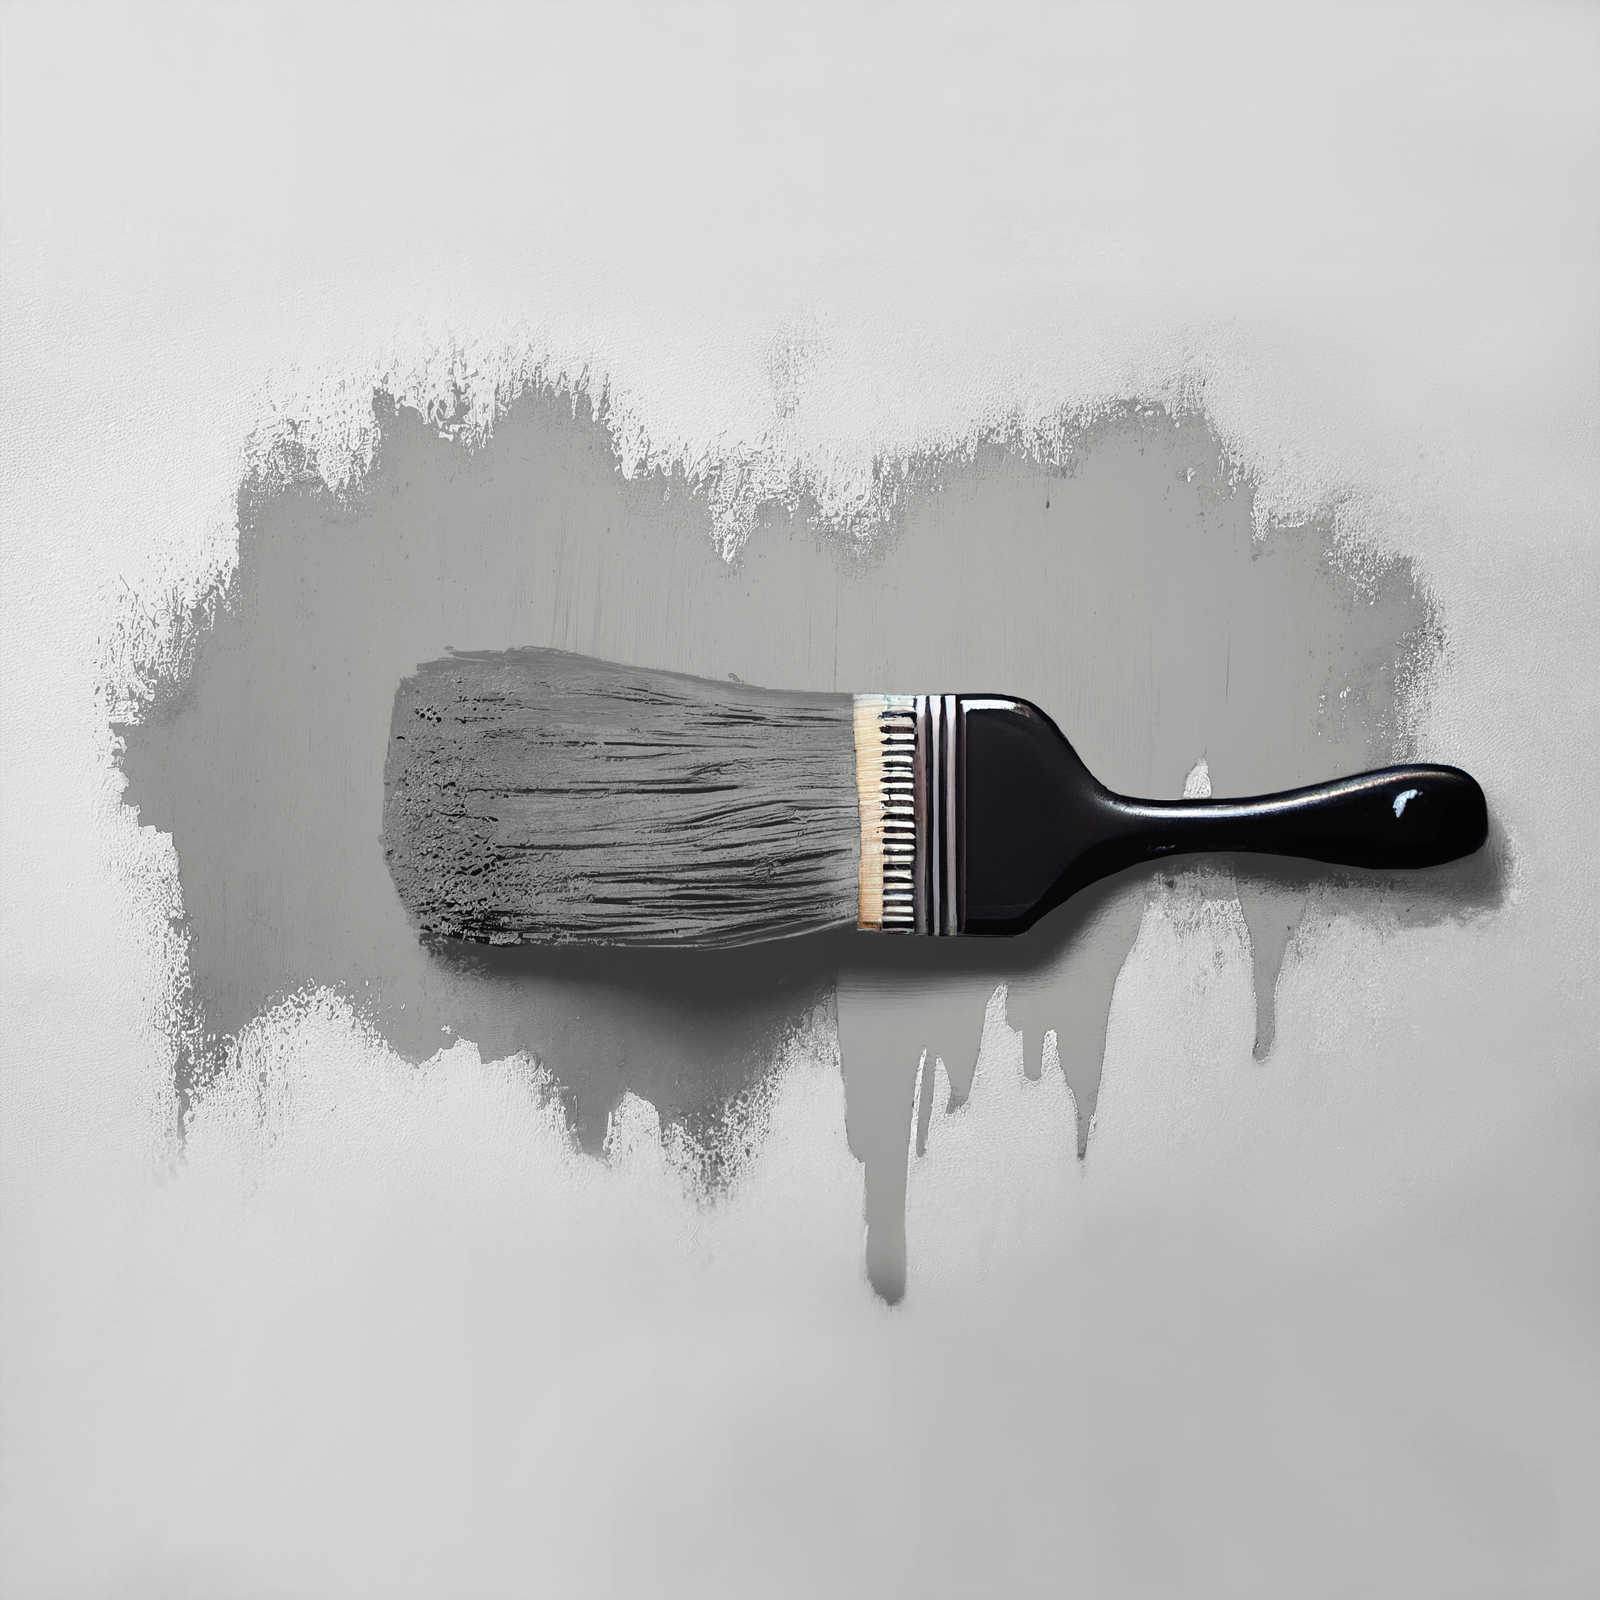             Pintura mural TCK1011 »Attractive Anchovies« en gris plata cálido – 2,5 litro
        